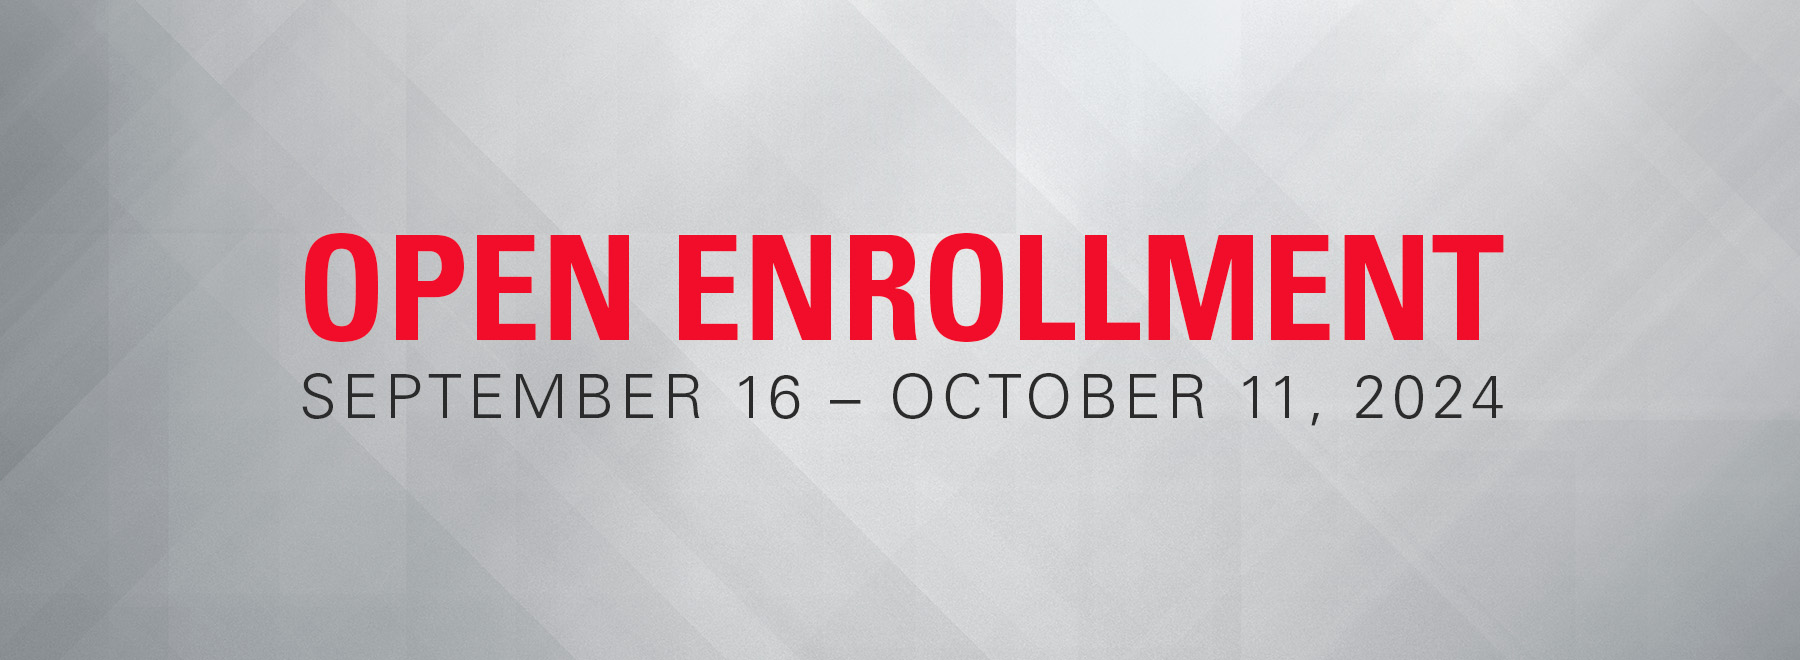 Open Enrollment: September 16 - October 11, 2024